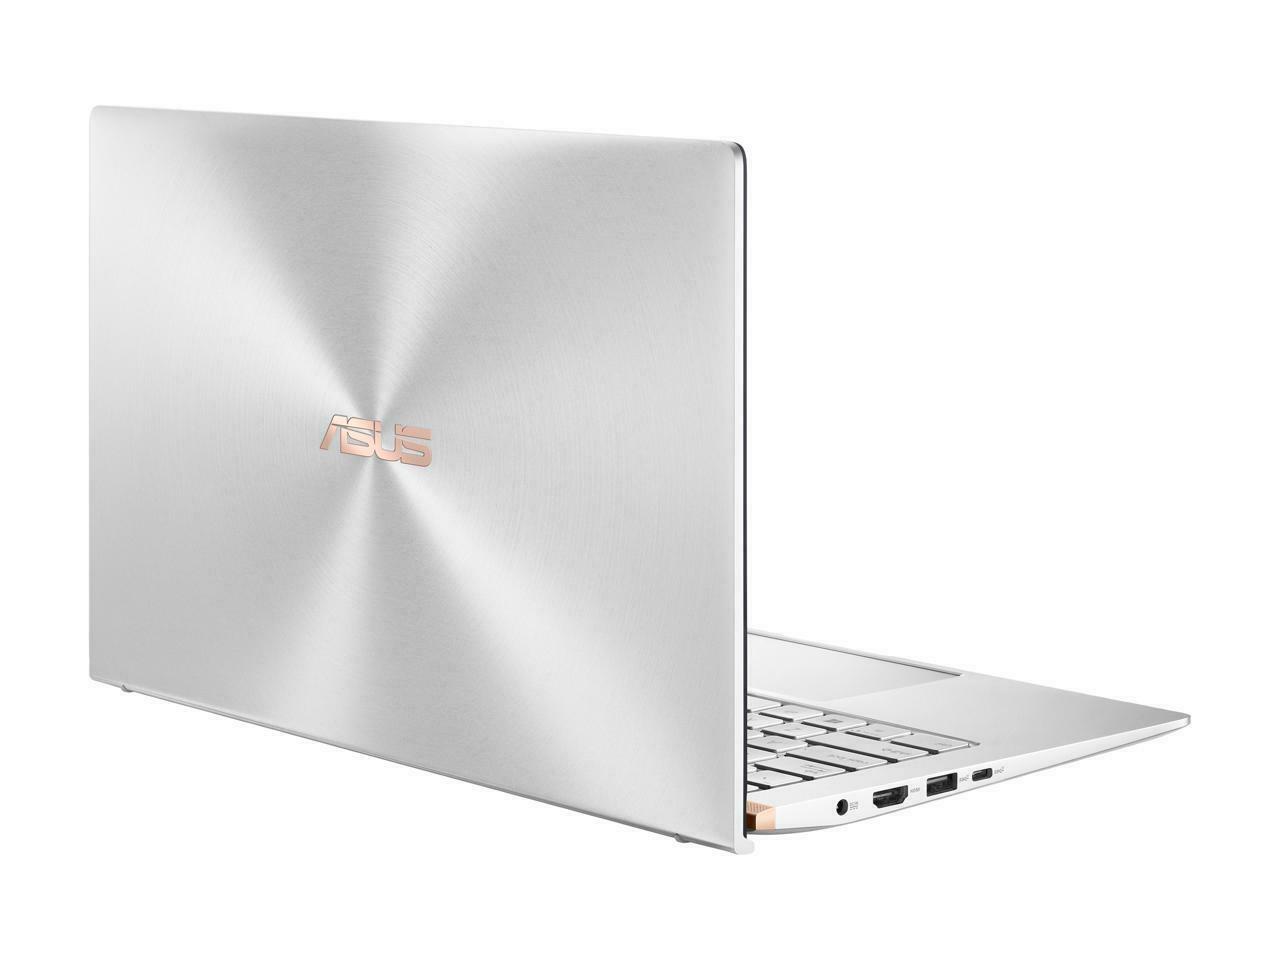 ASUS ZenBook 14 Ultra-Slim Laptop 14" Full HD 4-Way NanoEdge Bezel, AMD R7 3700U CPU, 8 GB RAM, 512 GB PCIe SSD, NumberPad, Windows 10 - UM433DA-DH75, Icicle Silver - image 2 of 2